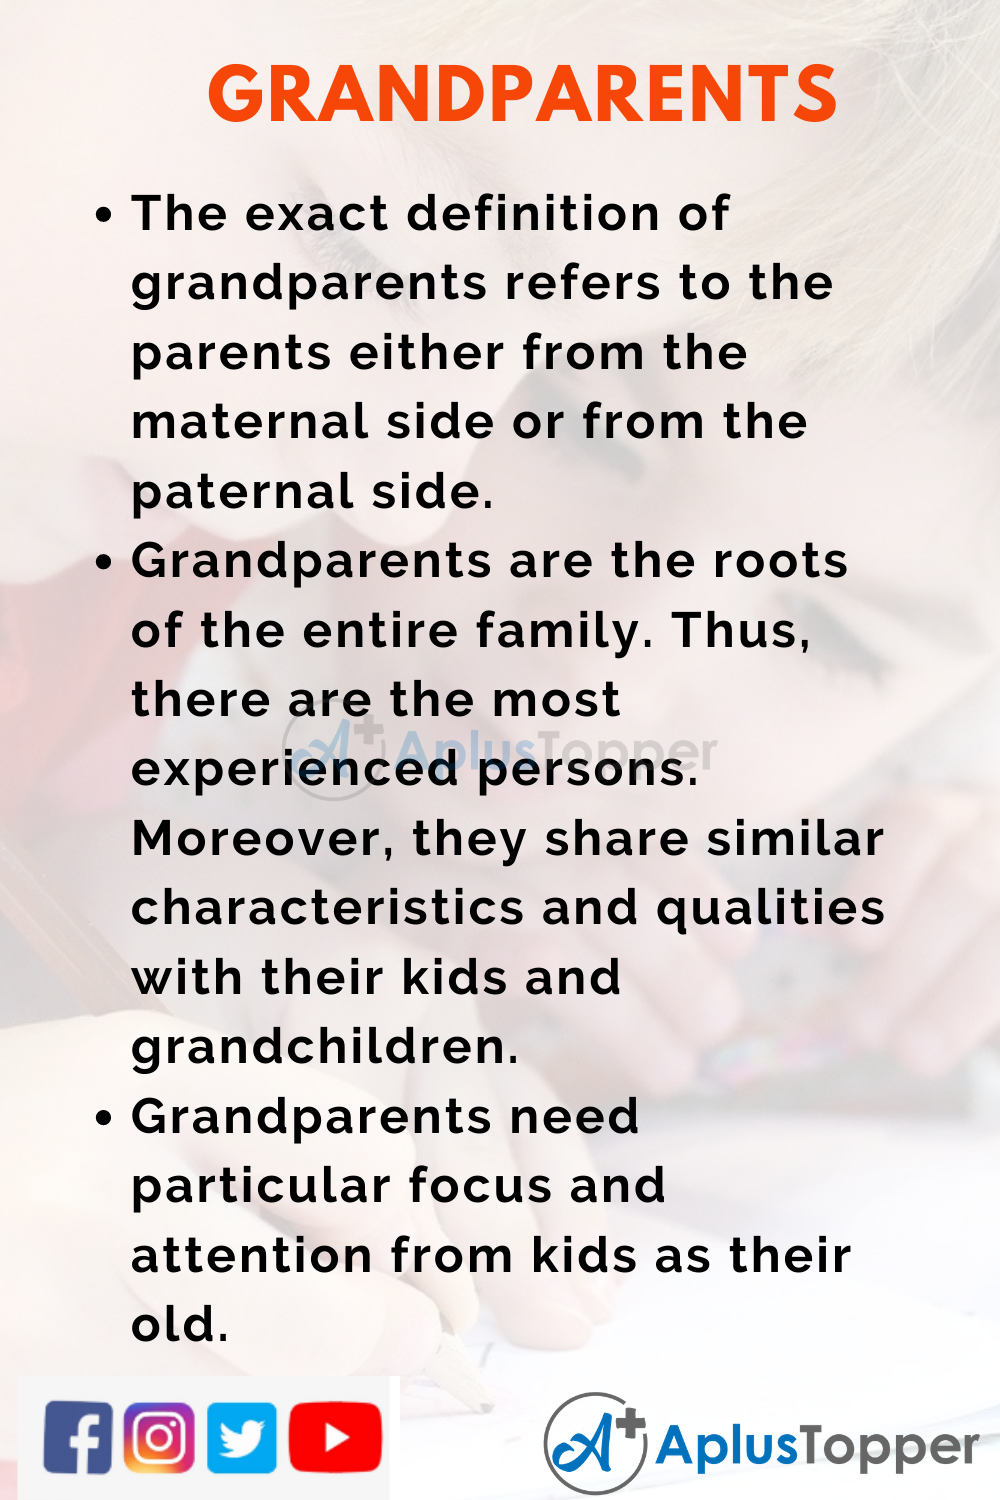 10 Lines on Grandparents for Kids